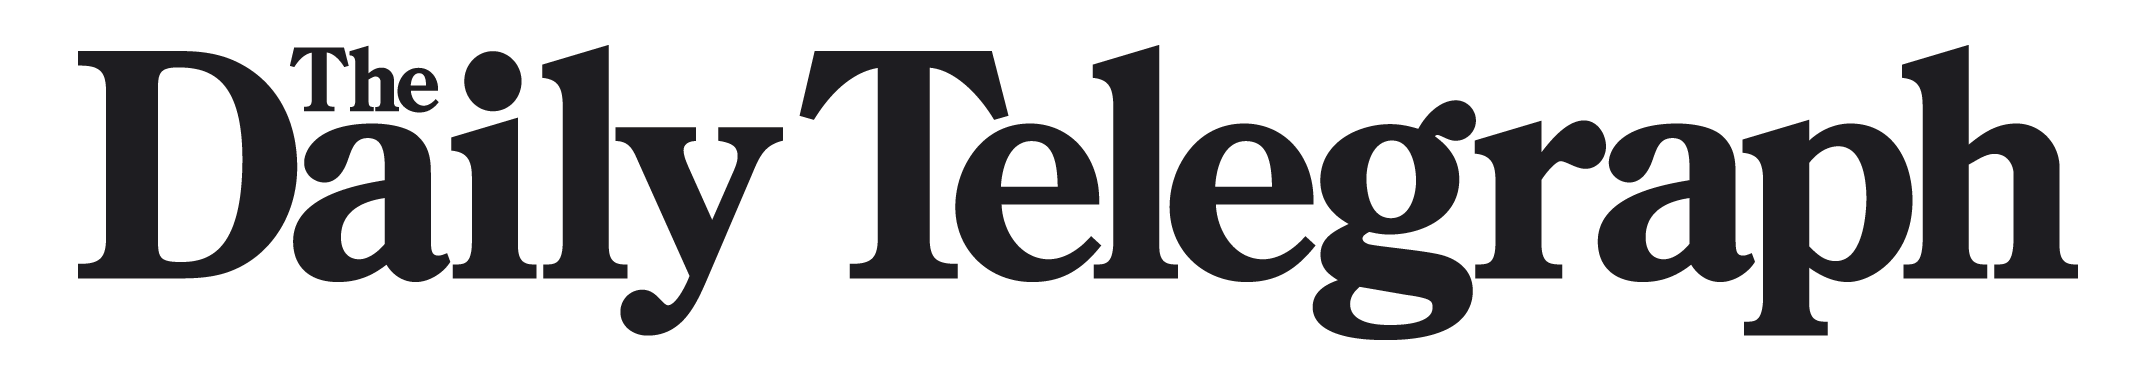 The_Daily_Telegraph_Australien_logo